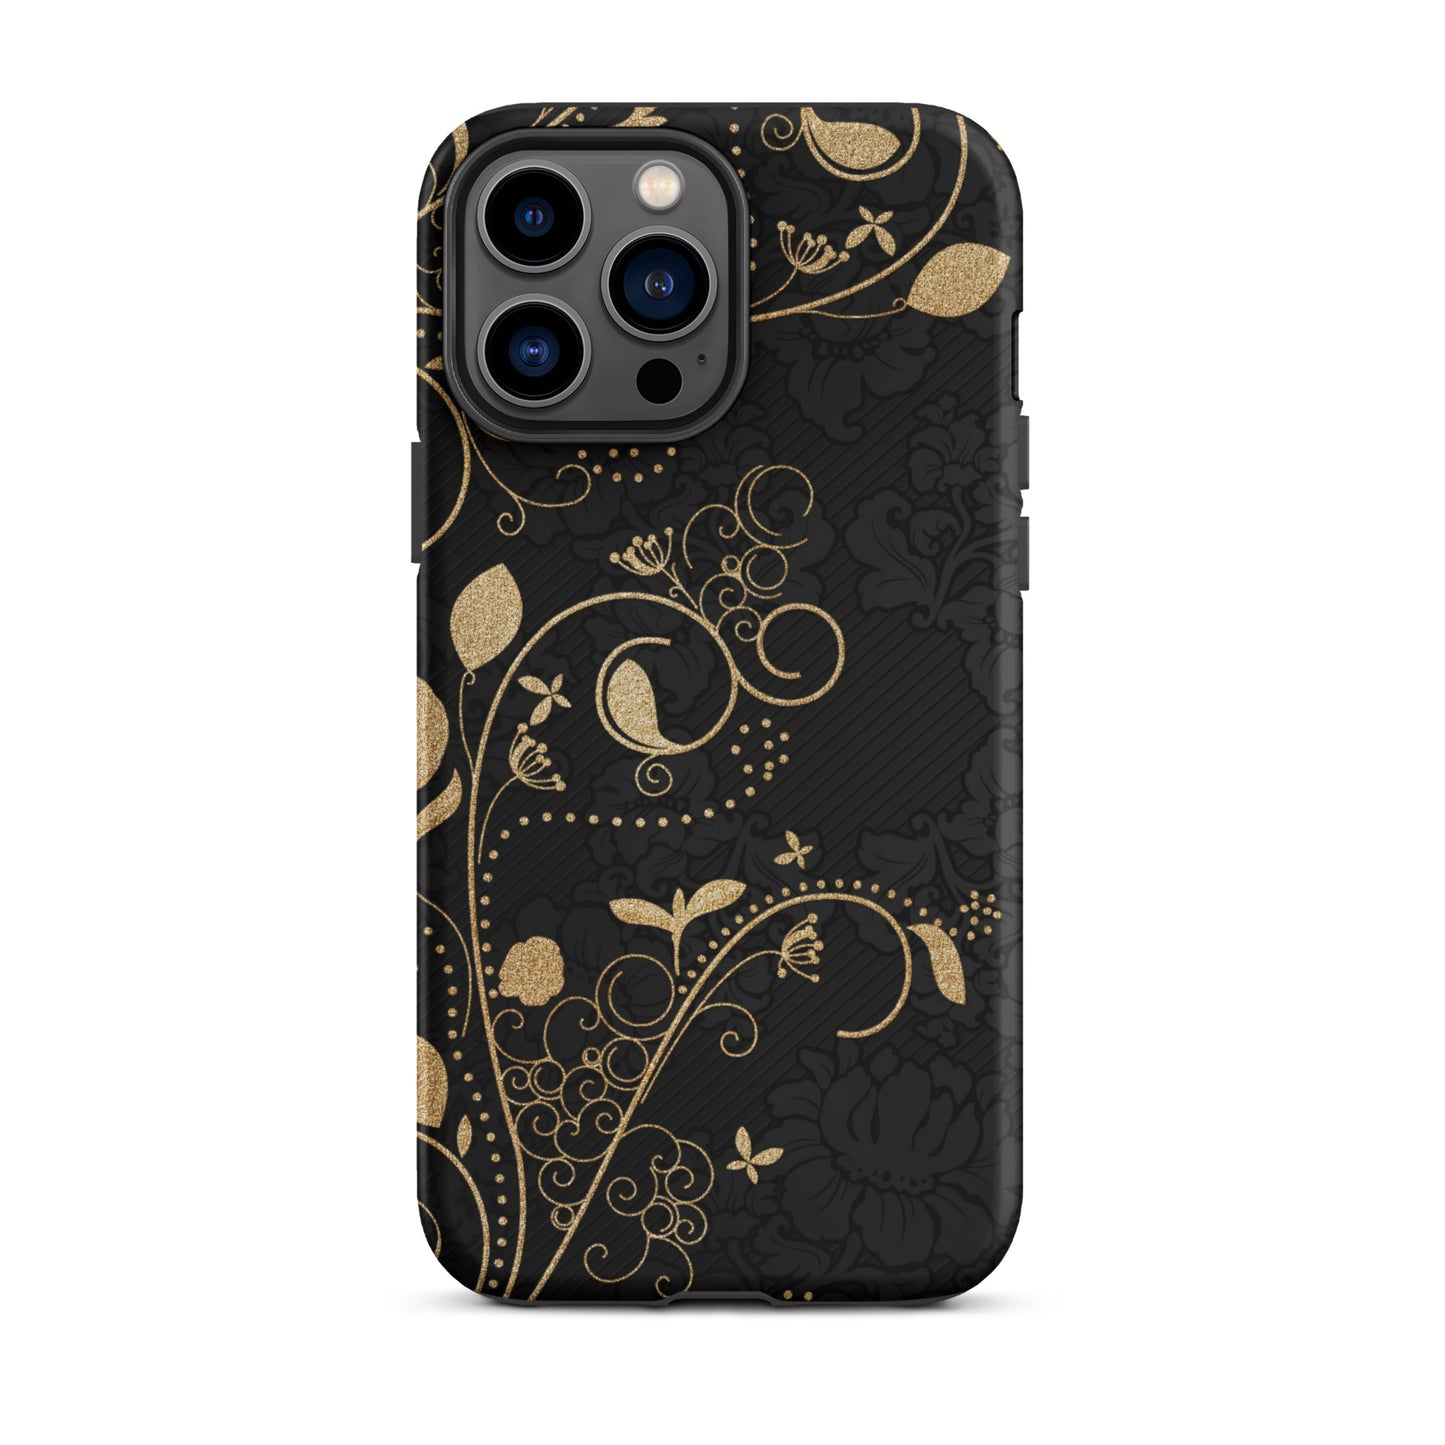 Black & Gold iPhone case